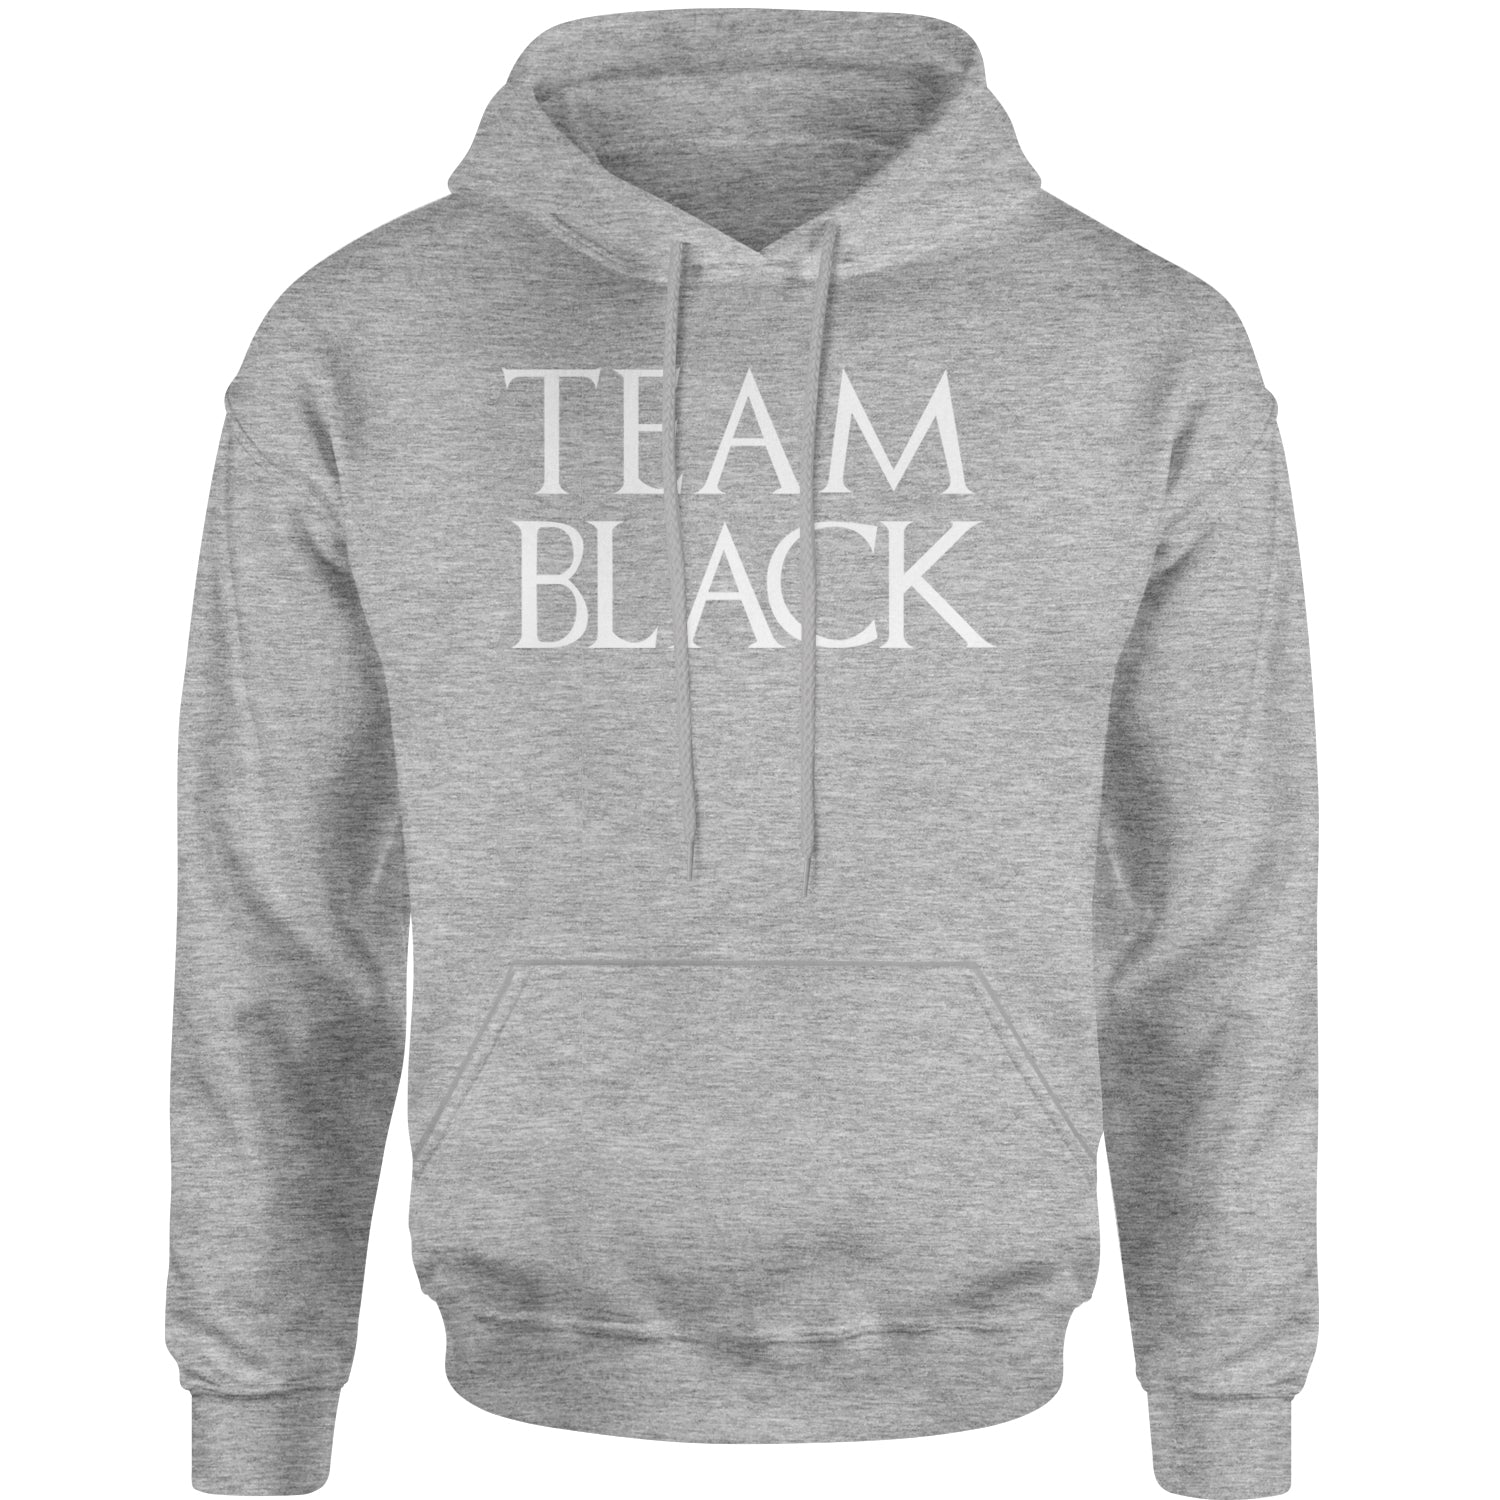 Team Black HotD Adult Hoodie Sweatshirt alicent, hightower, rhaneyra, targaryen by Expression Tees